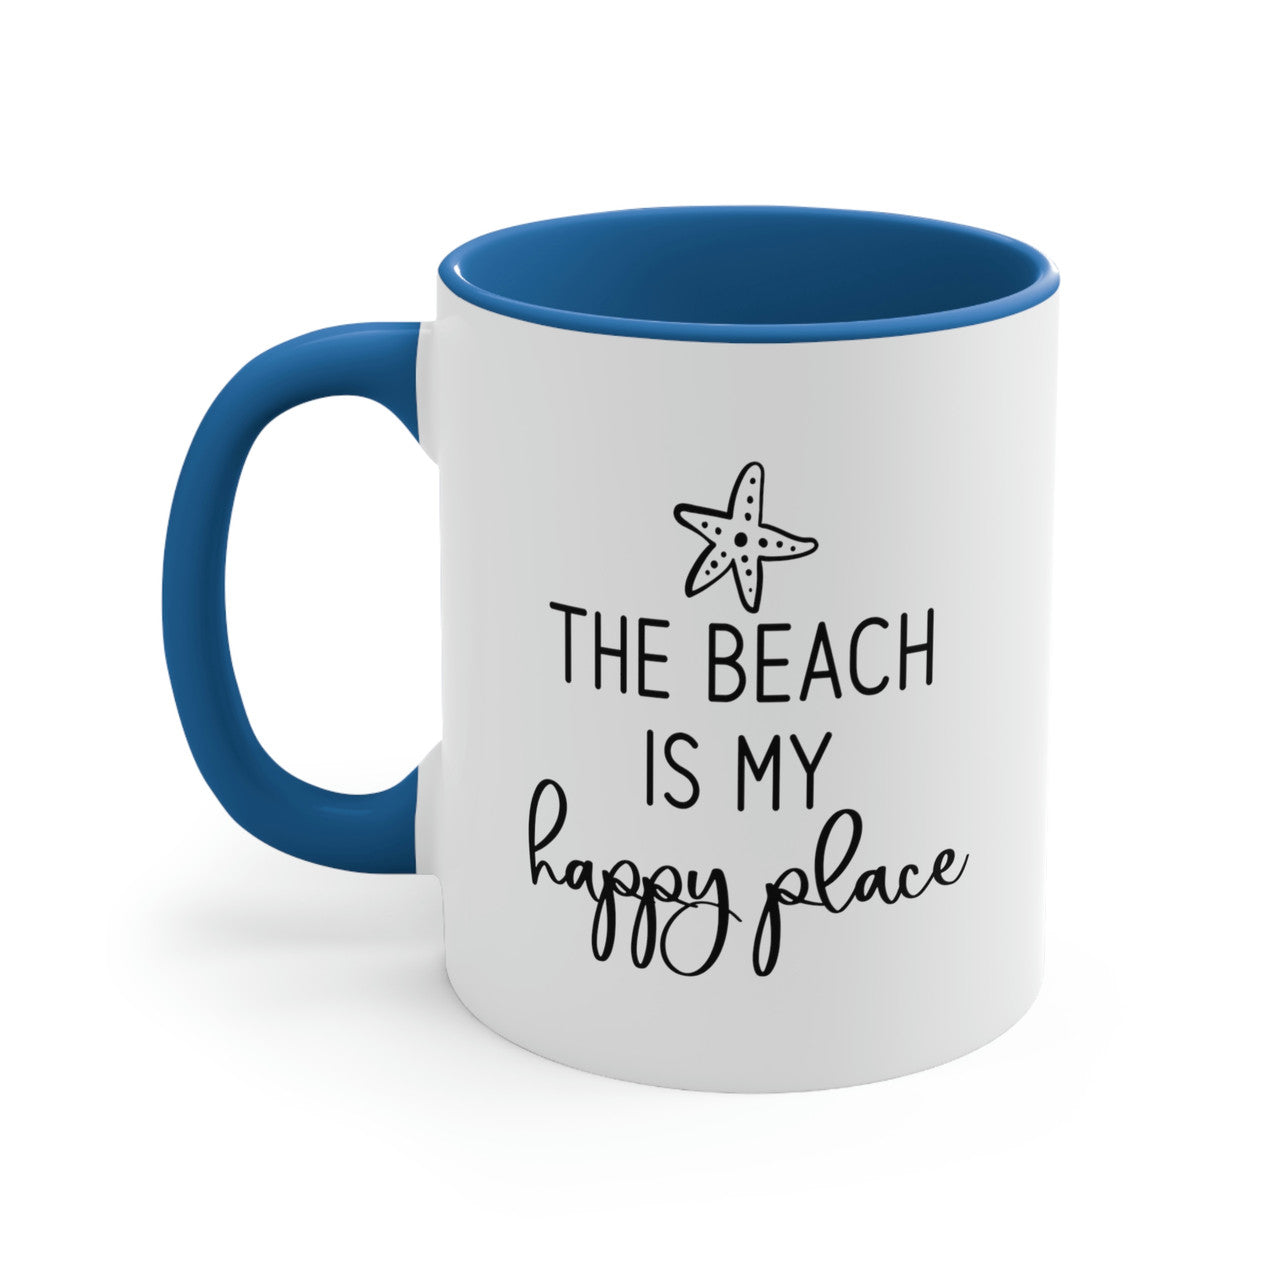 The Beach Is My Happy Place Ceramic Coffee Mug, 5 Colors Mugs New England Trading Co Light Blue  